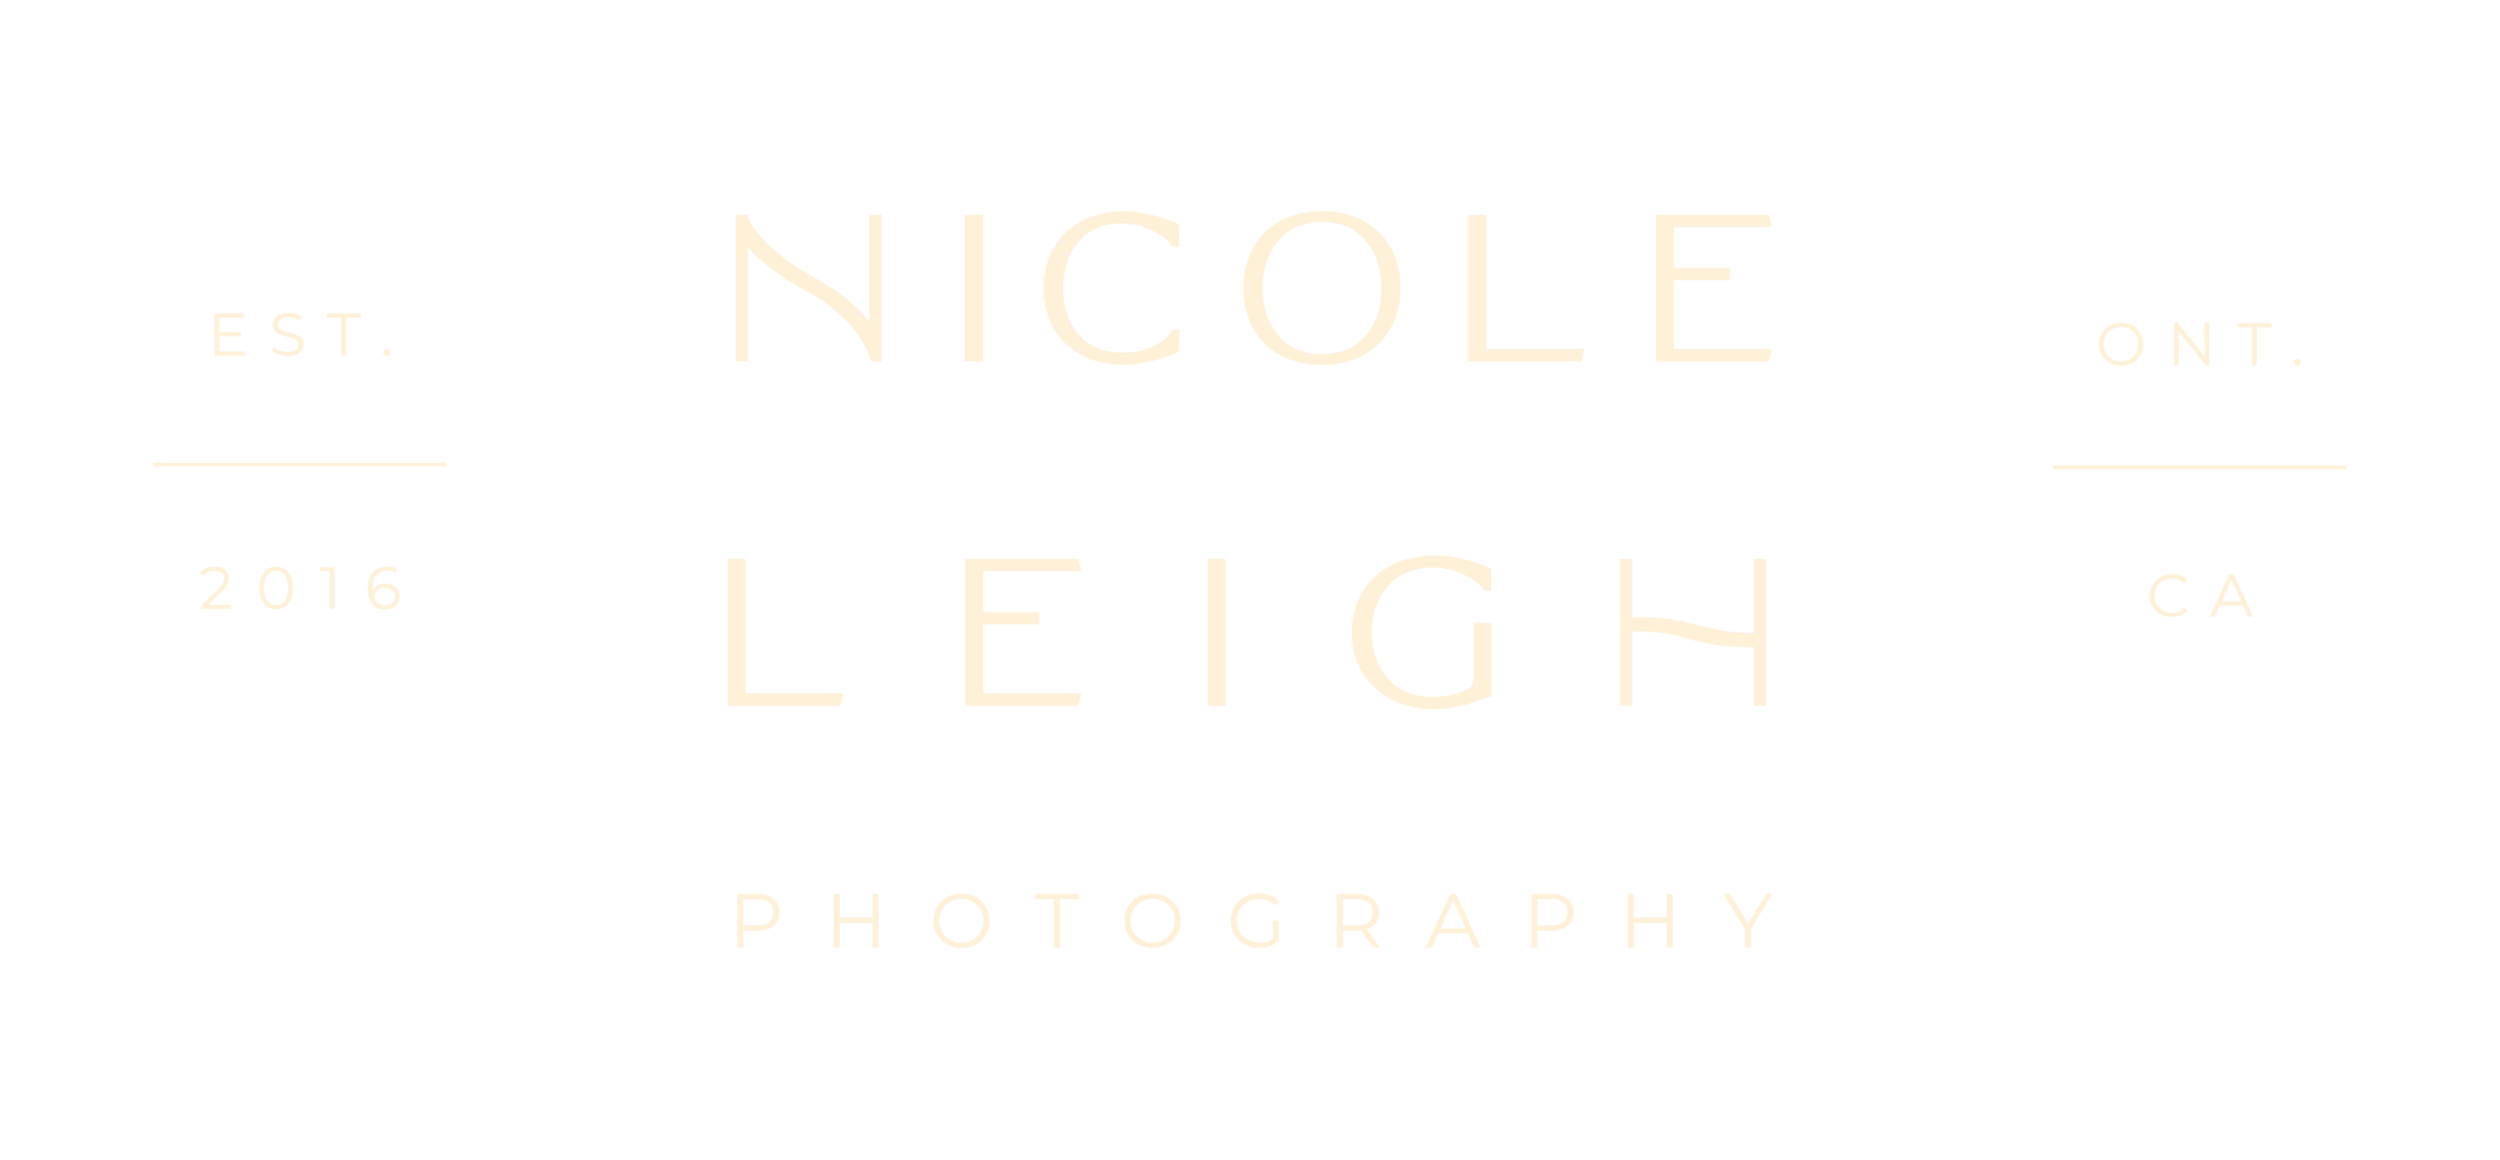 Nicole Leigh Photography